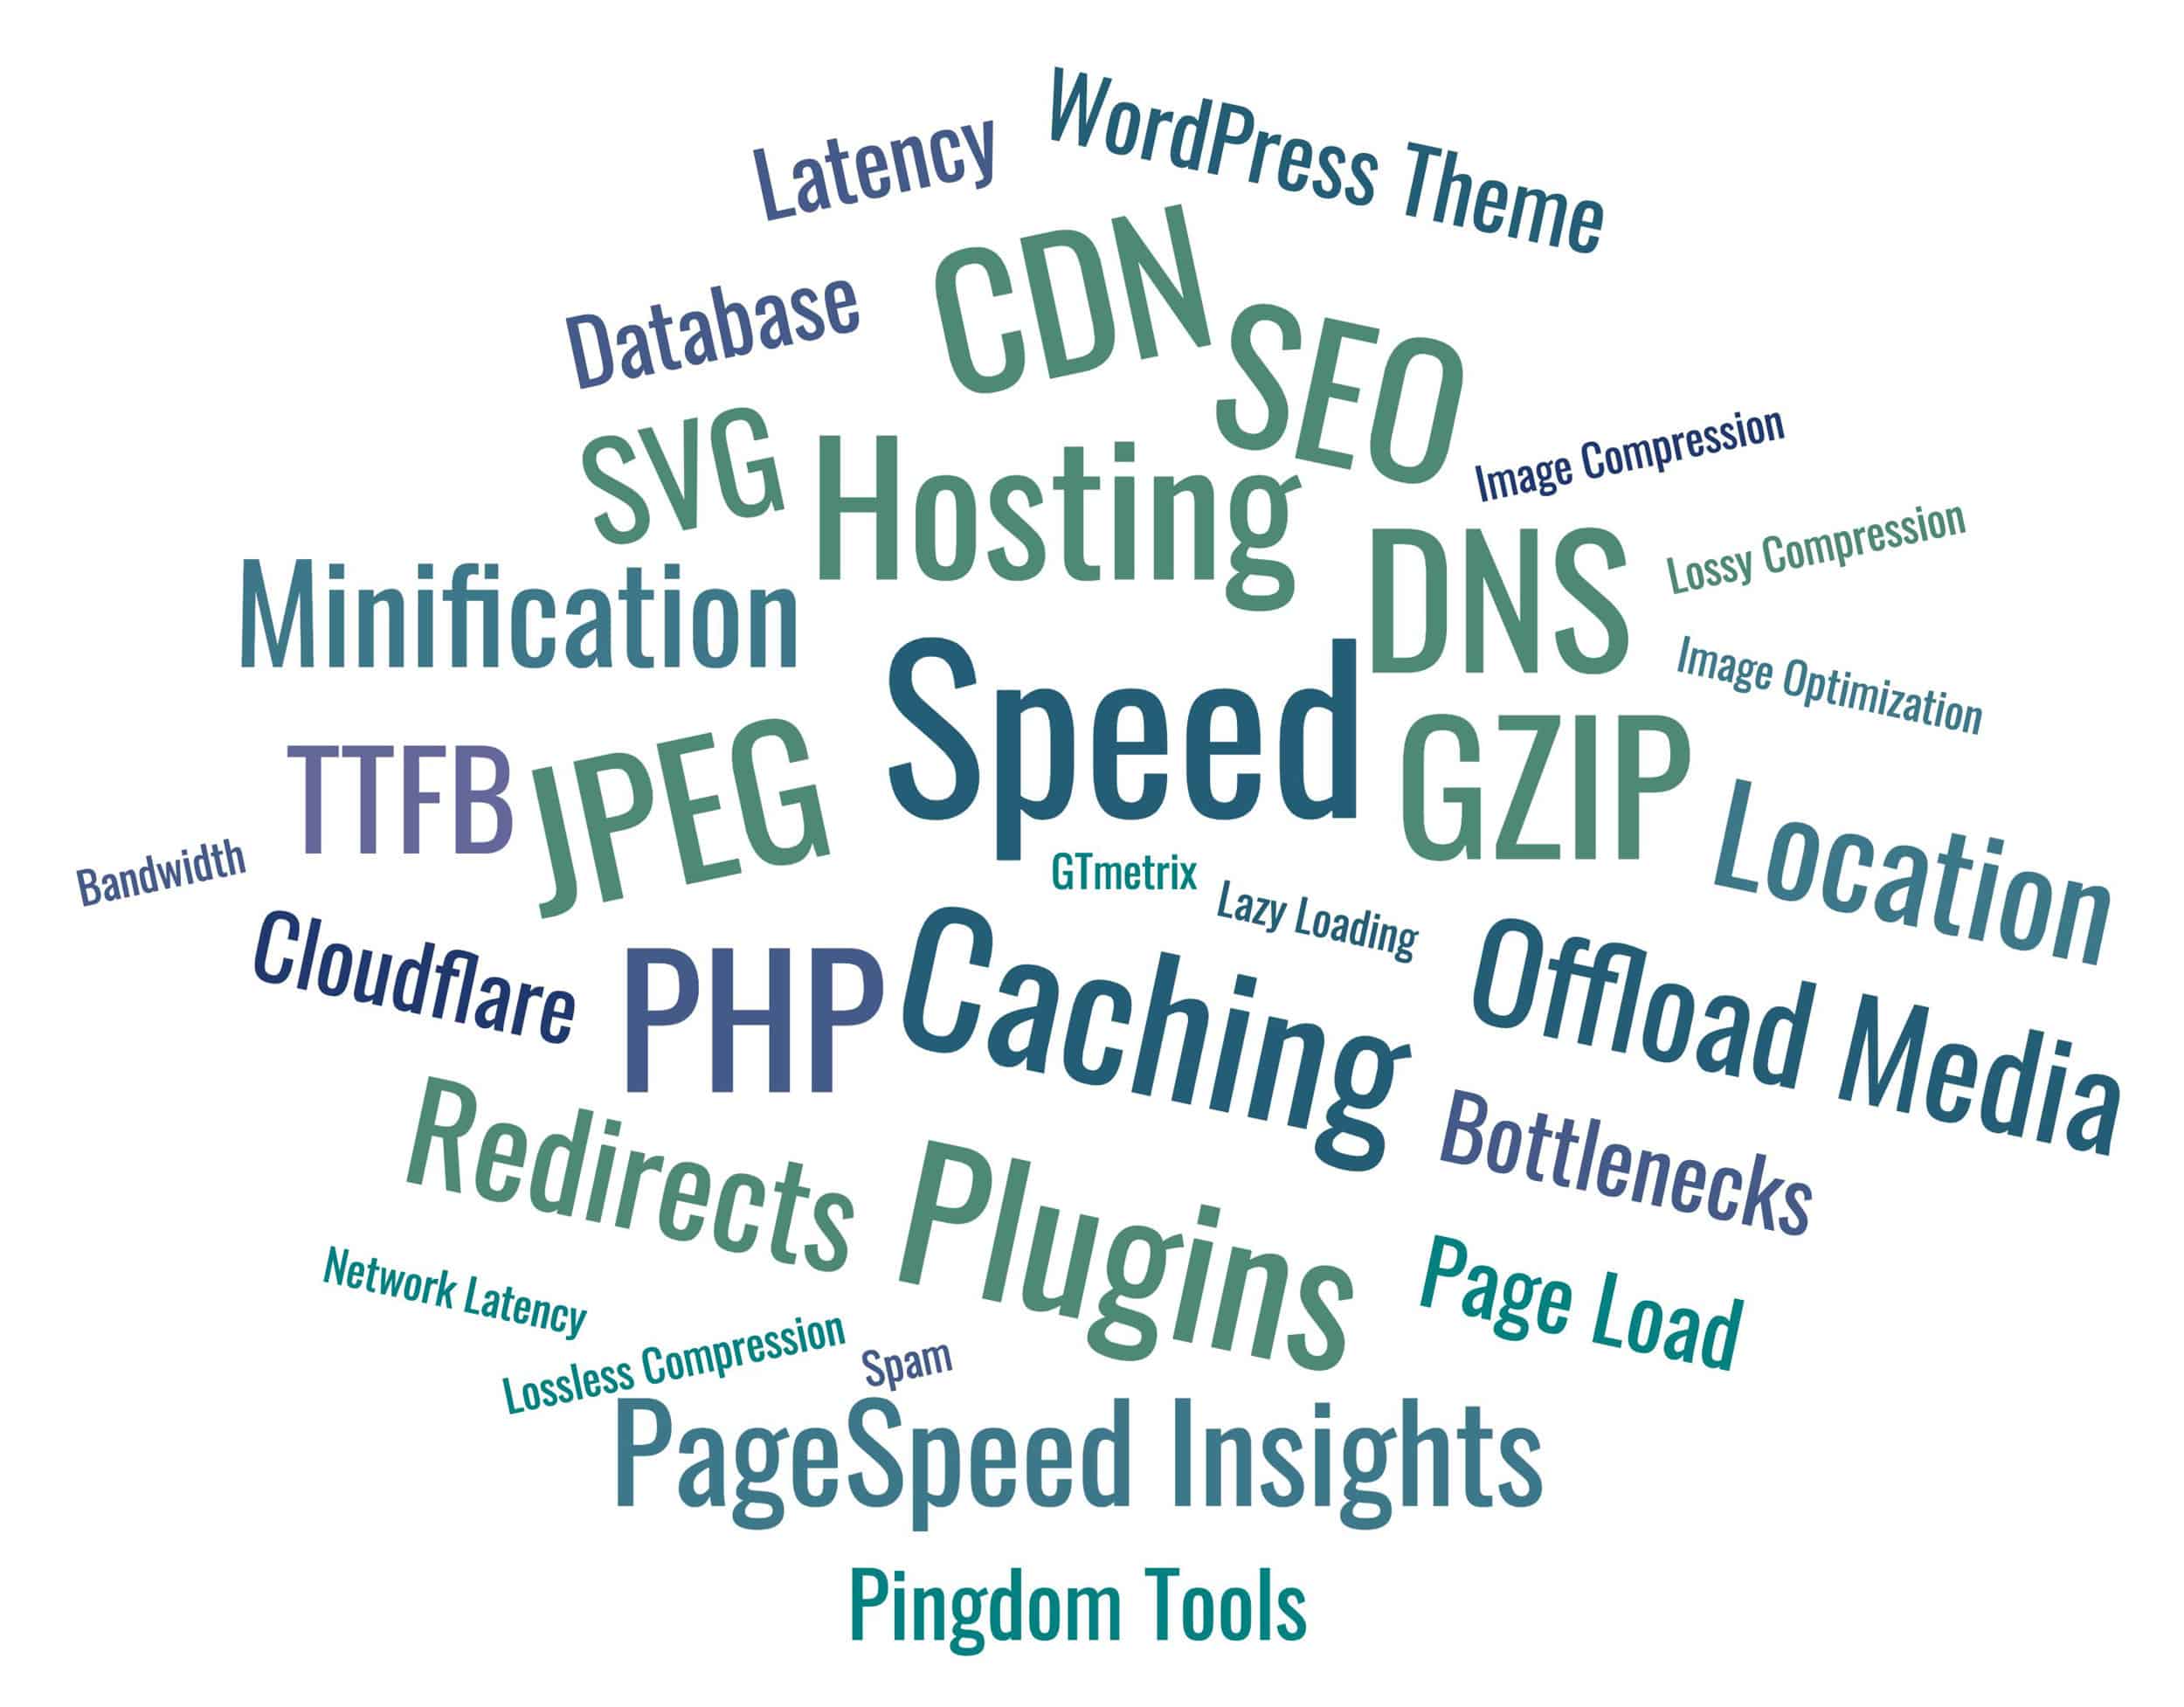 Words describing Website Speed Audit – Hosting, Caching, Plugins, Page Load, Image Optimization, Lazy Load